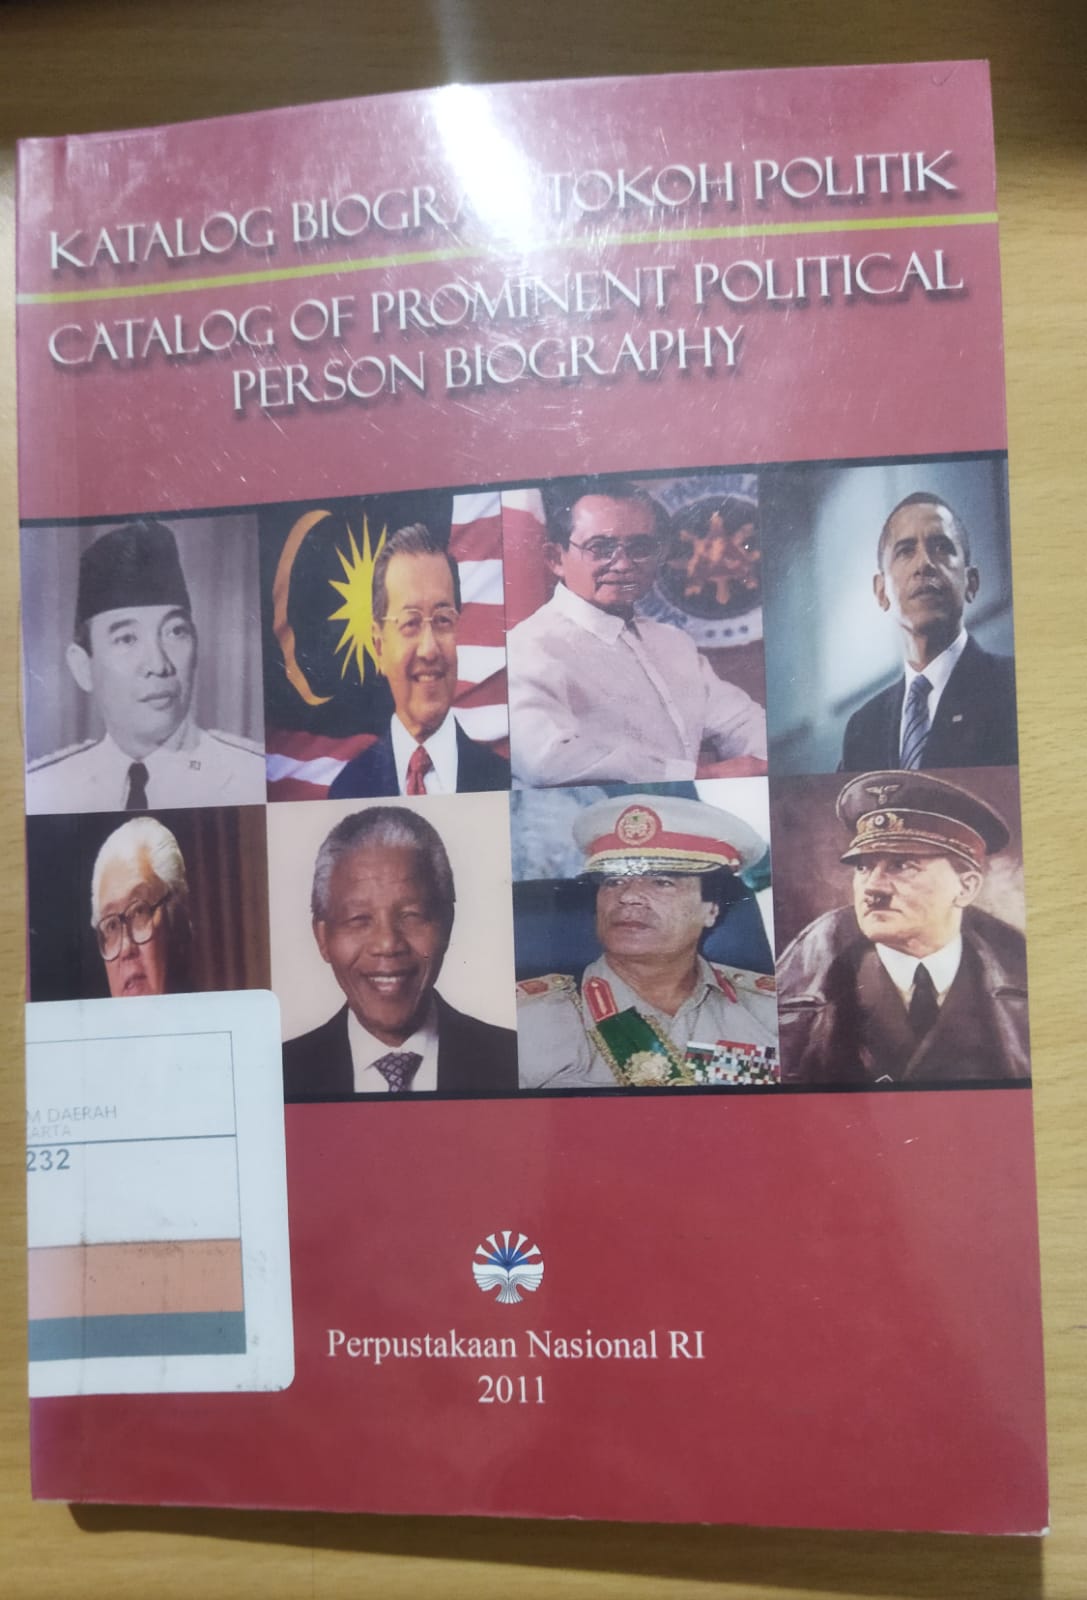 KATALOG biografi tokoh politik = :  catalog of prominent political person biograhy